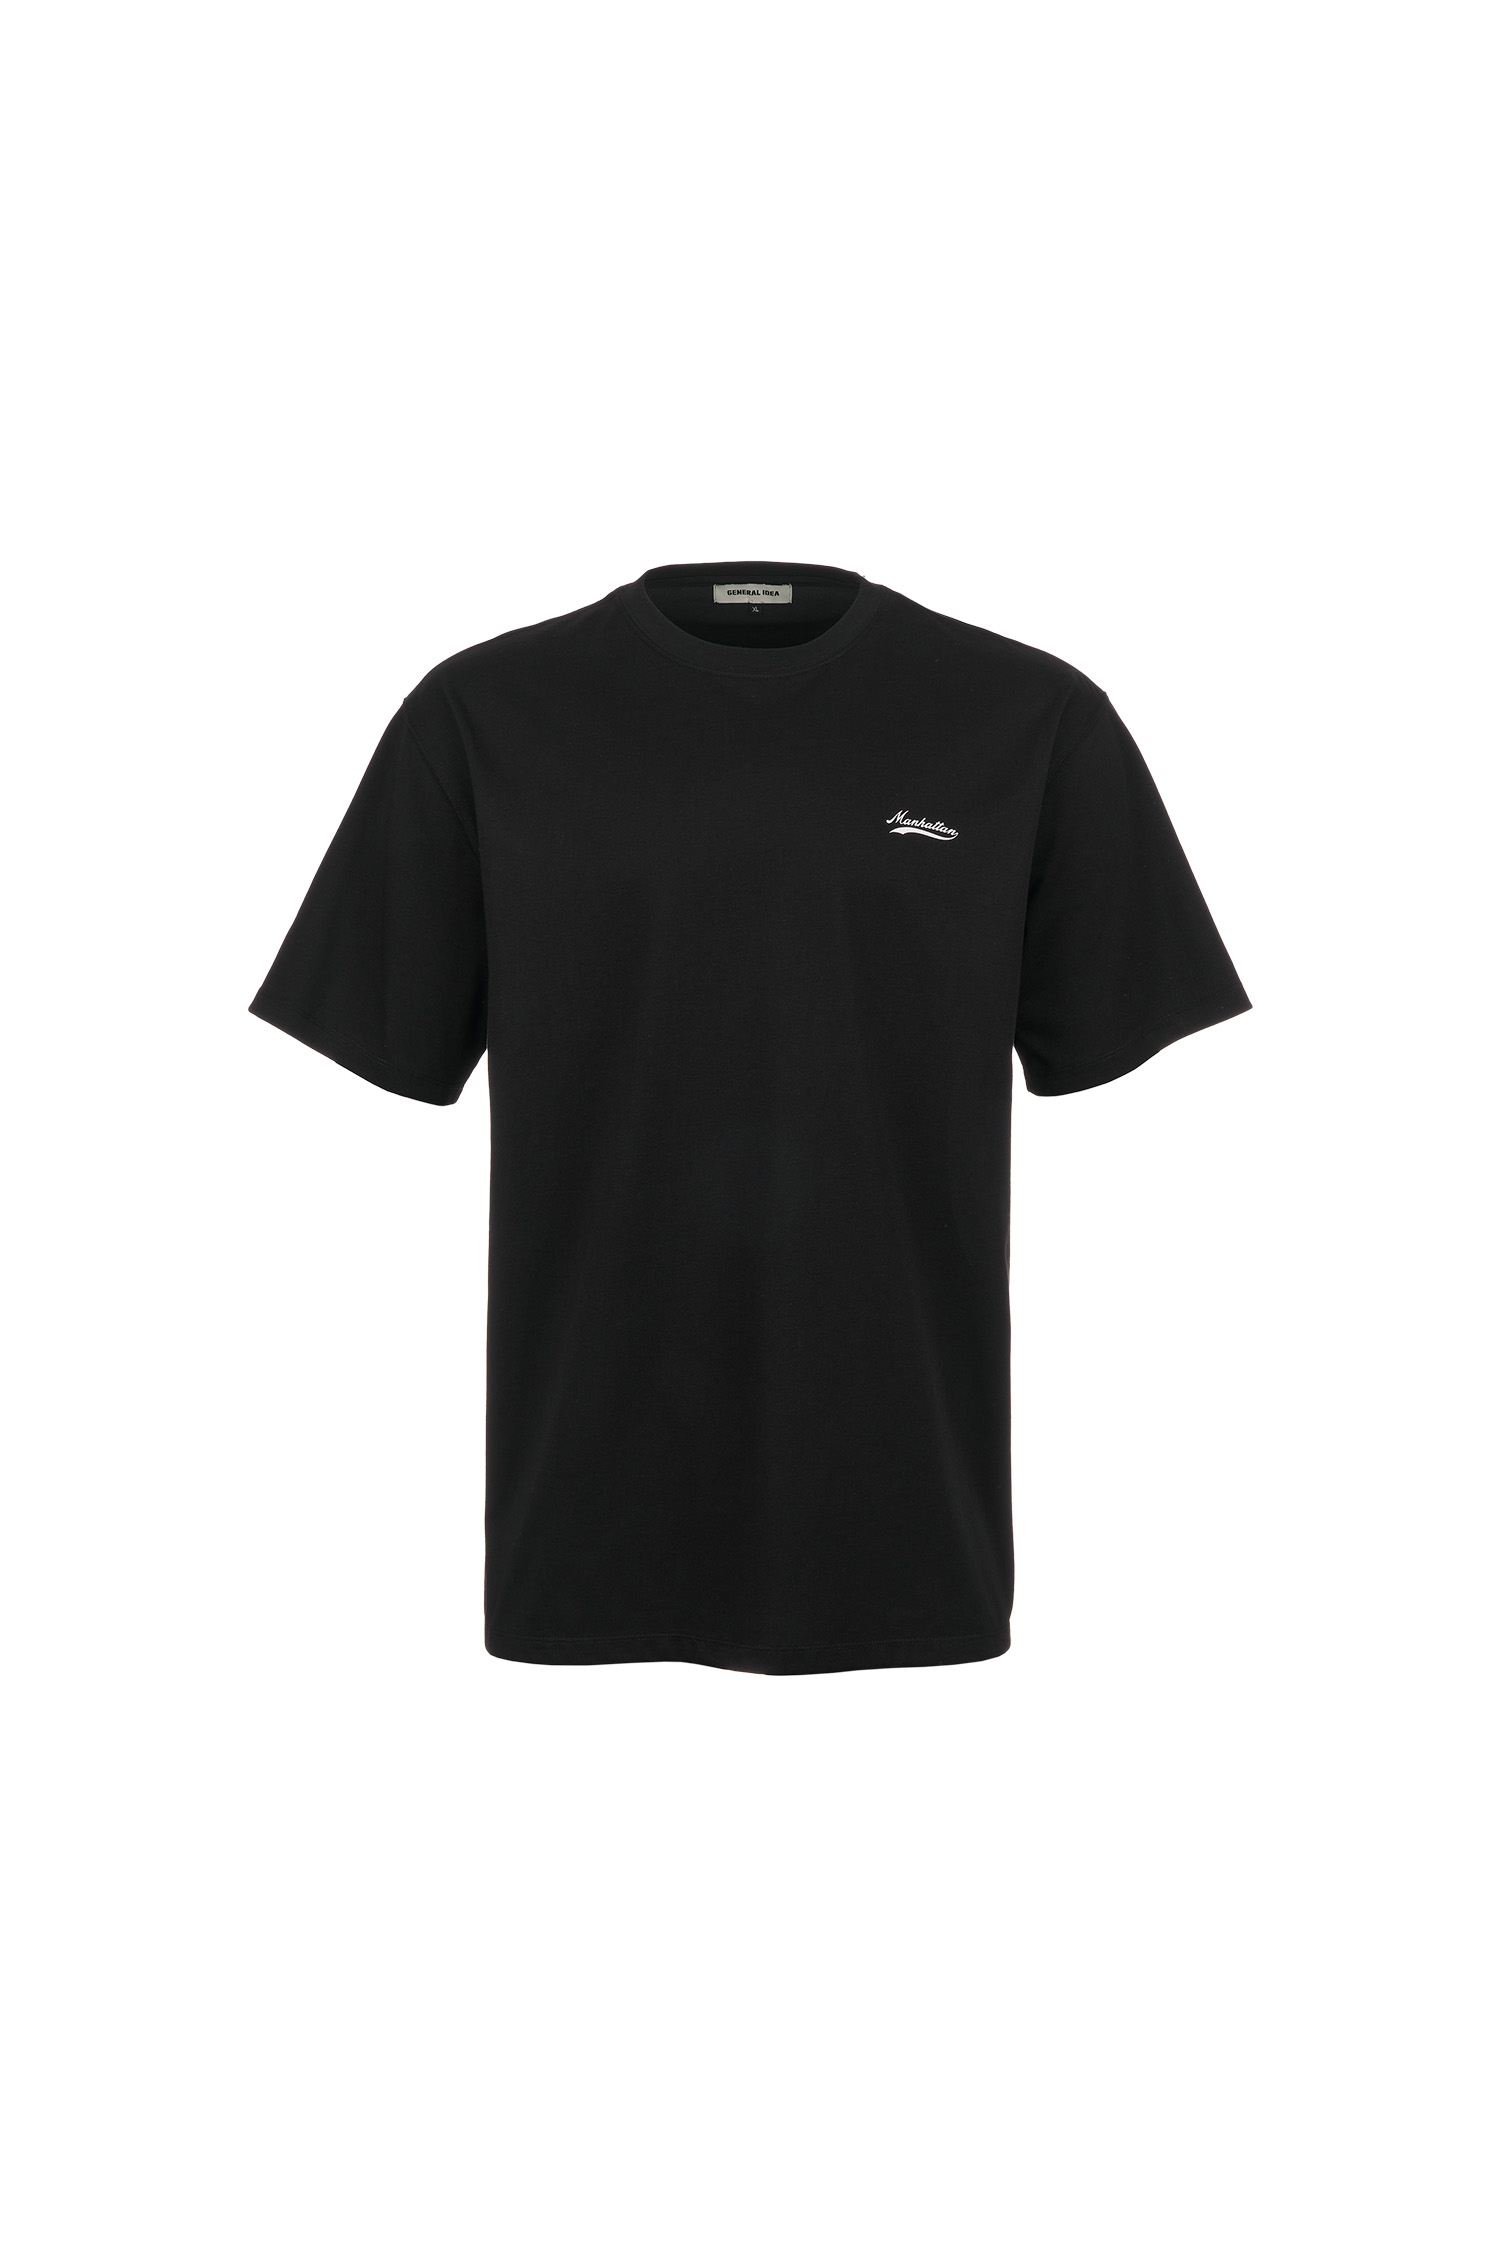 UNISEX 맨하탄 반팔 티셔츠 [BLACK]